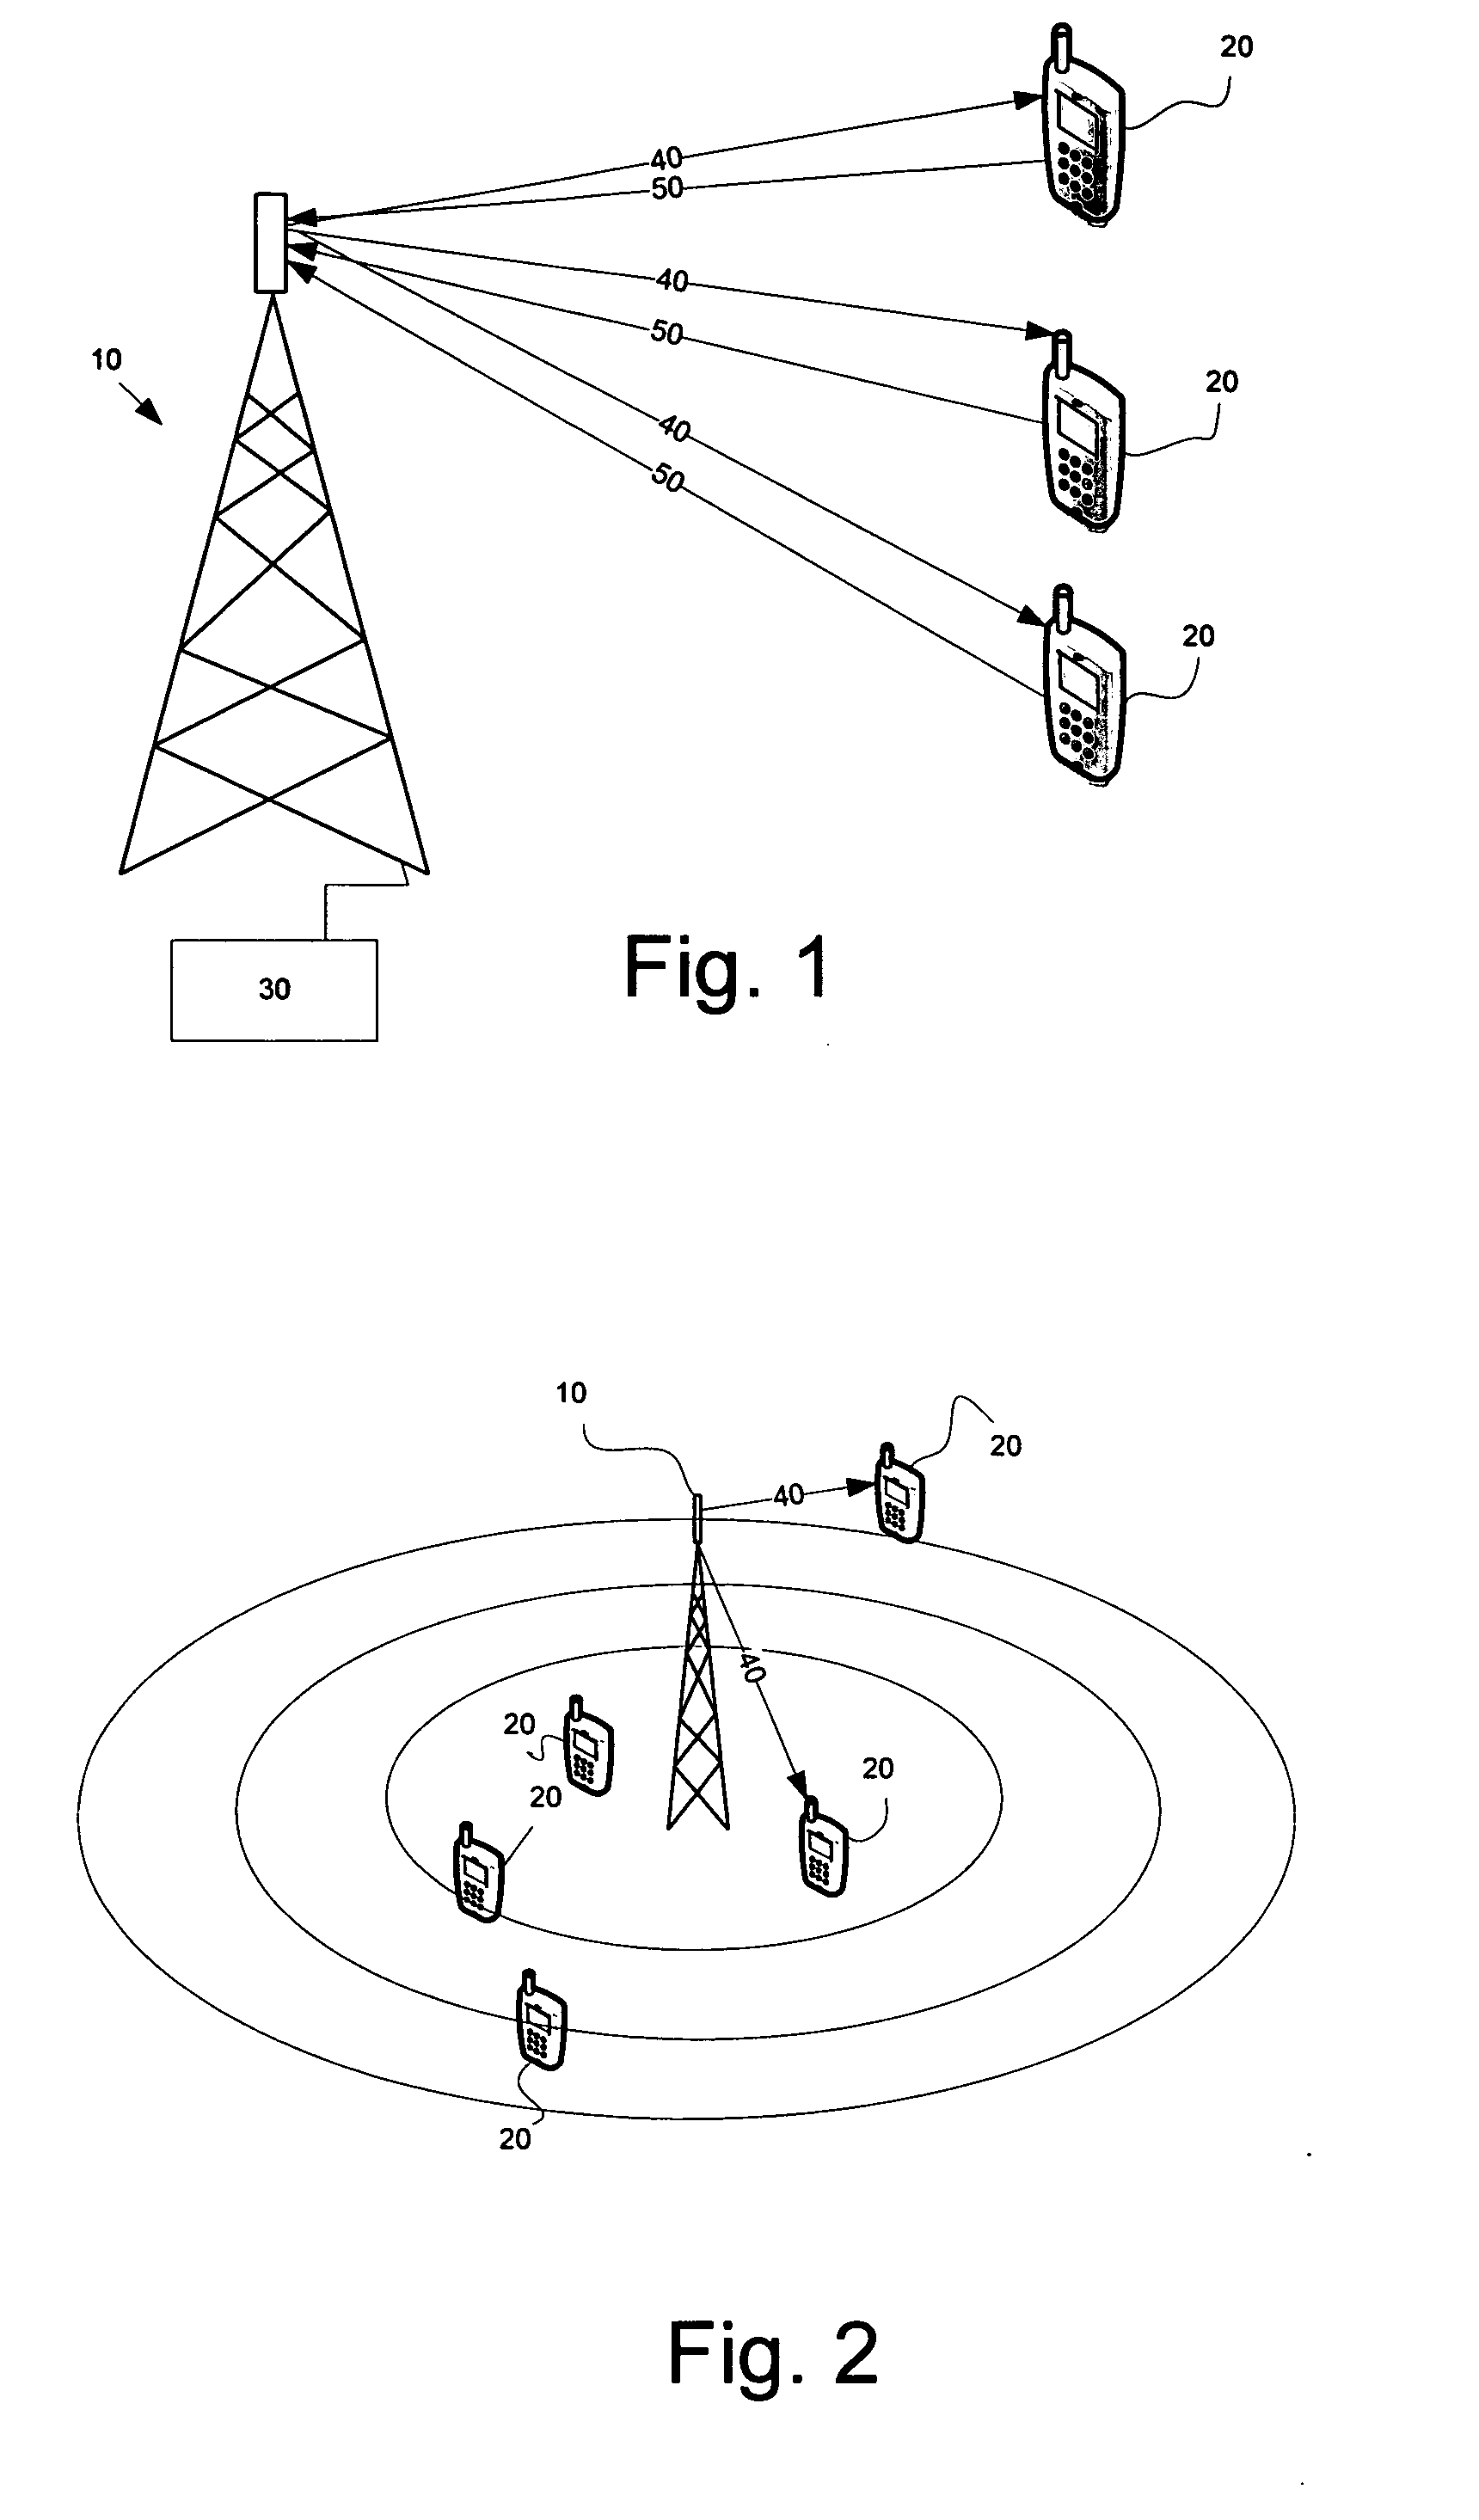 Method and arrangement for transmitting cq1 on the uplink